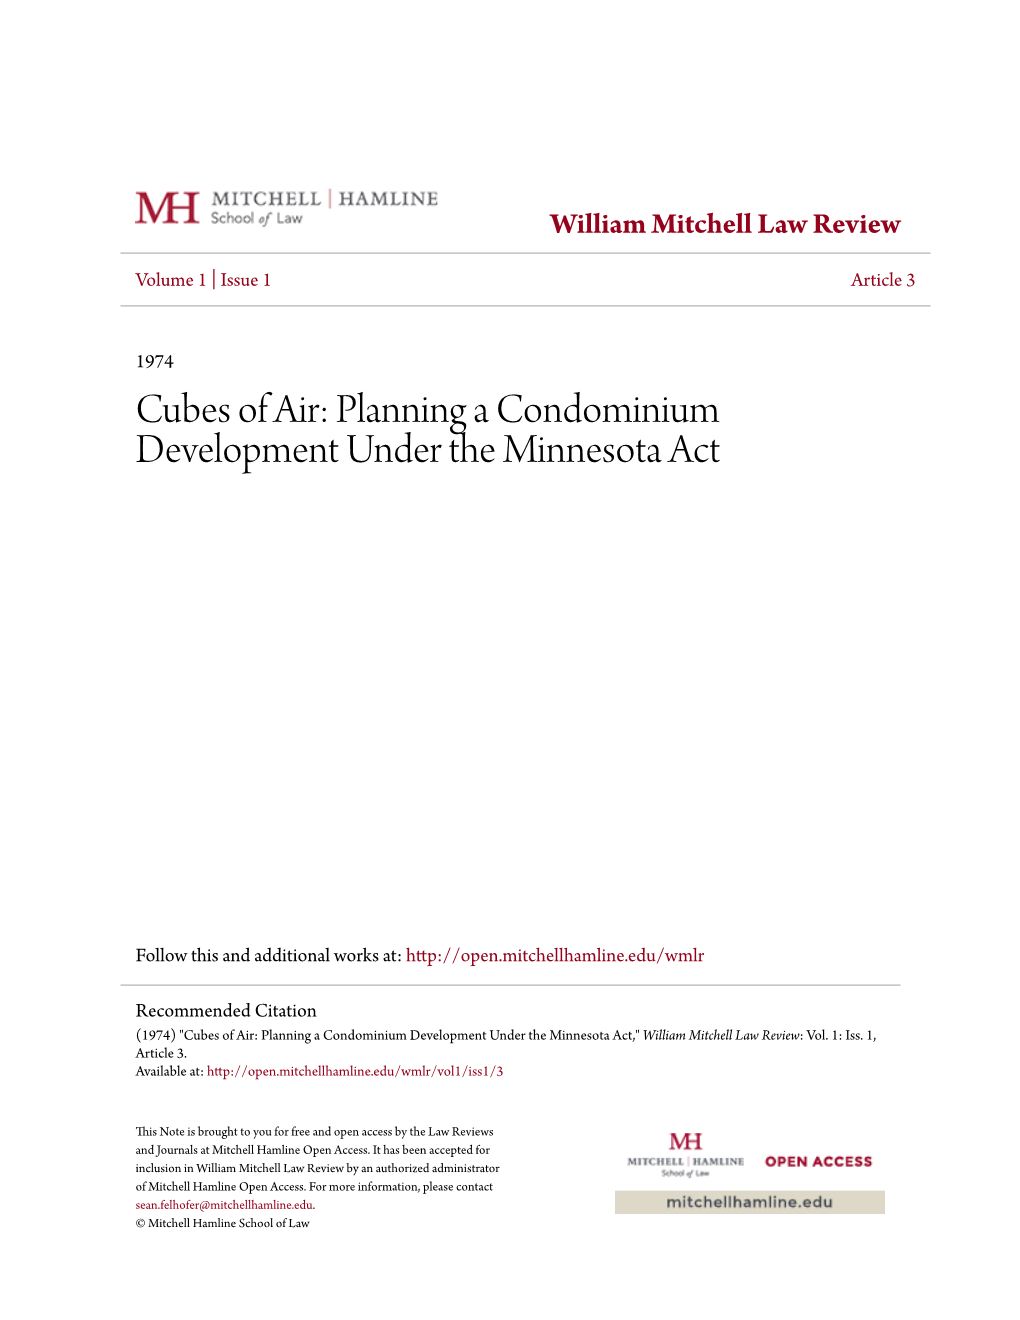 Cubes of Air: Planning a Condominium Development Under the Minnesota Act